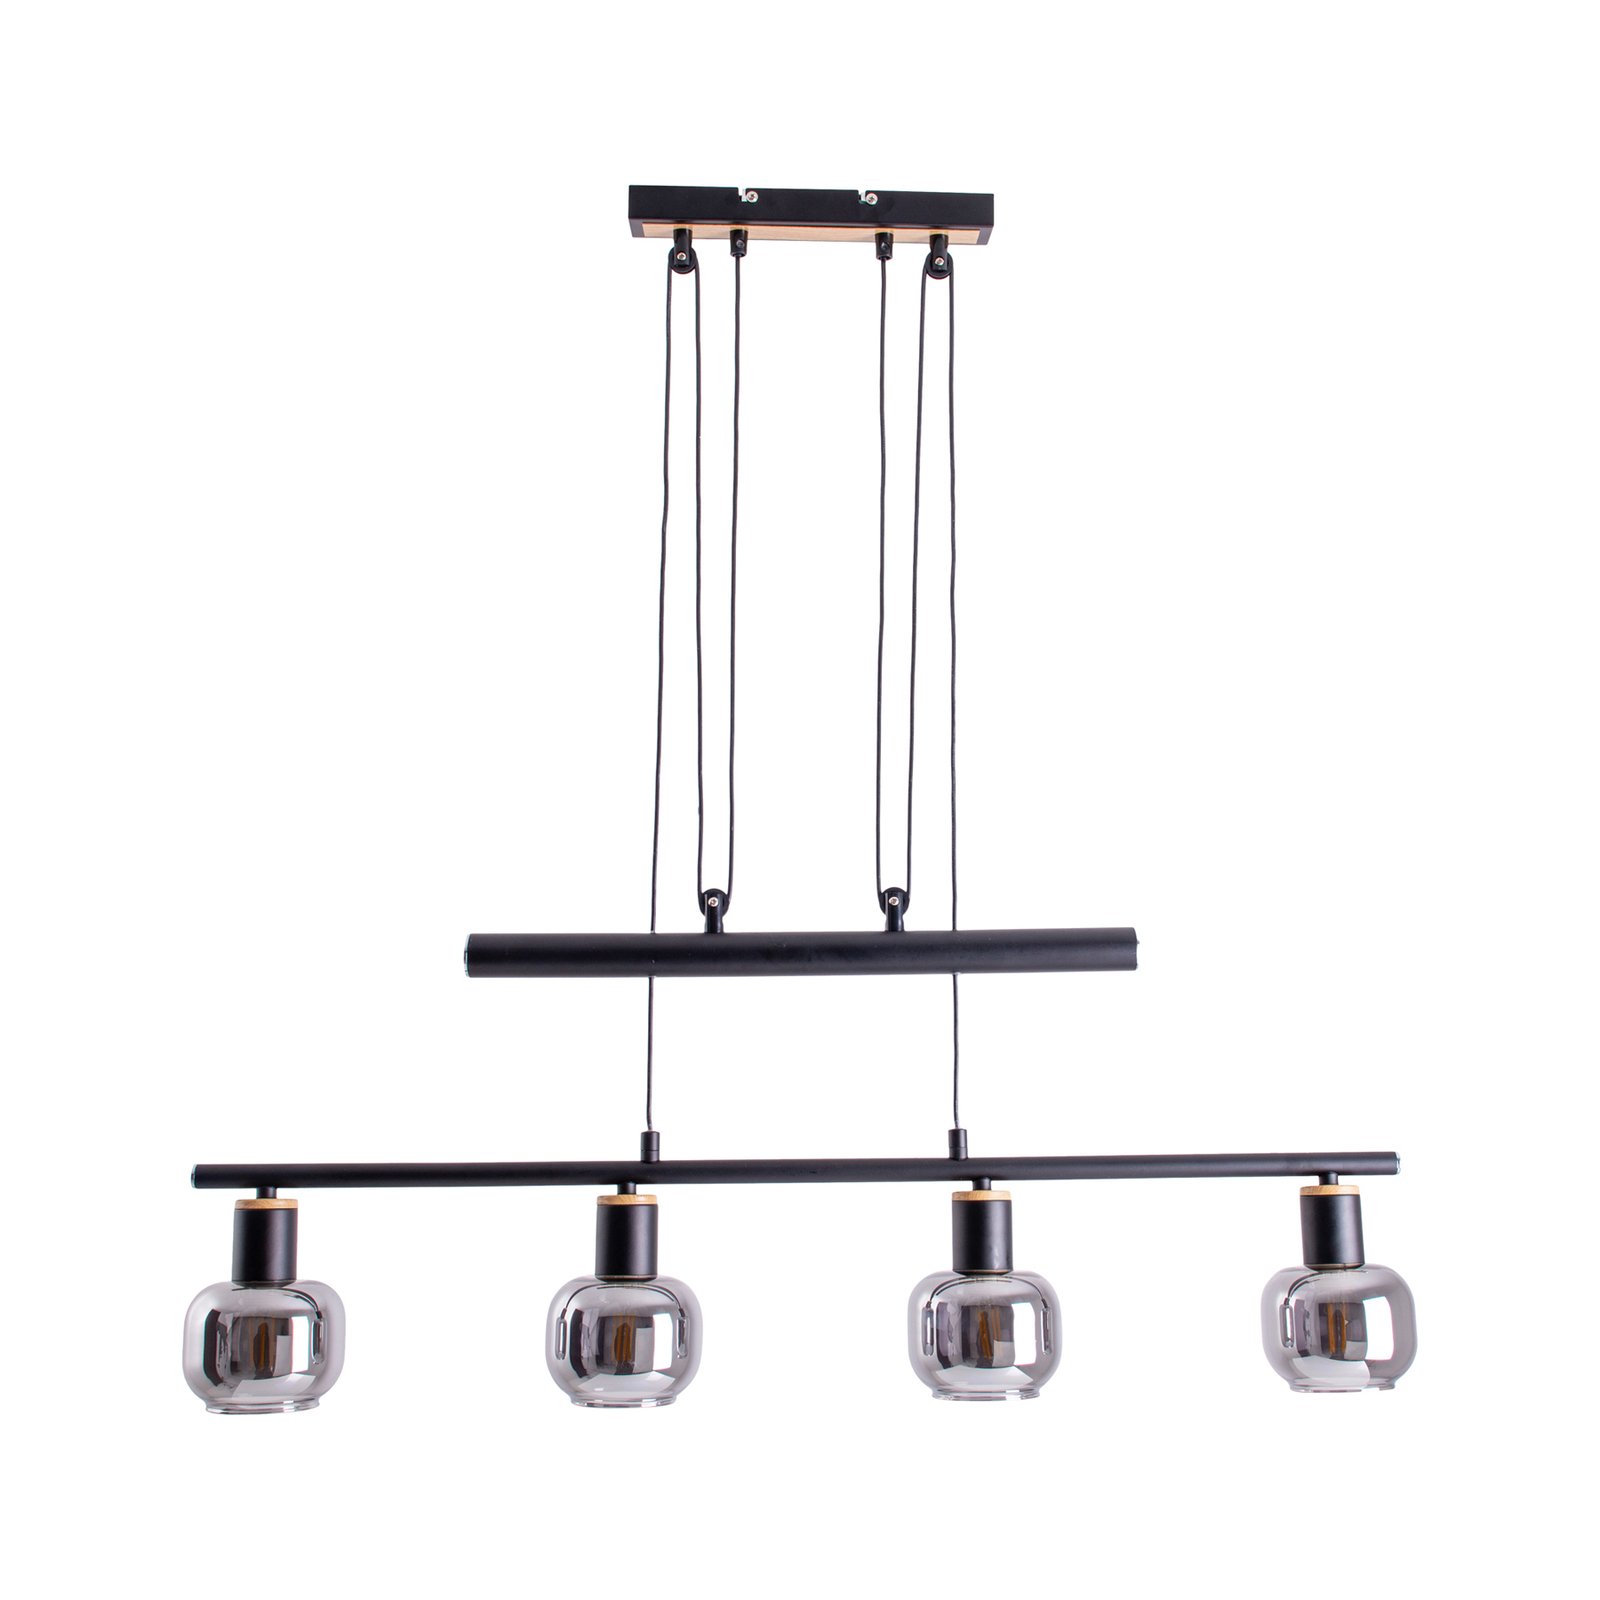 Balk hanglamp Fumoso 4-lamps zwart/rookgrijs